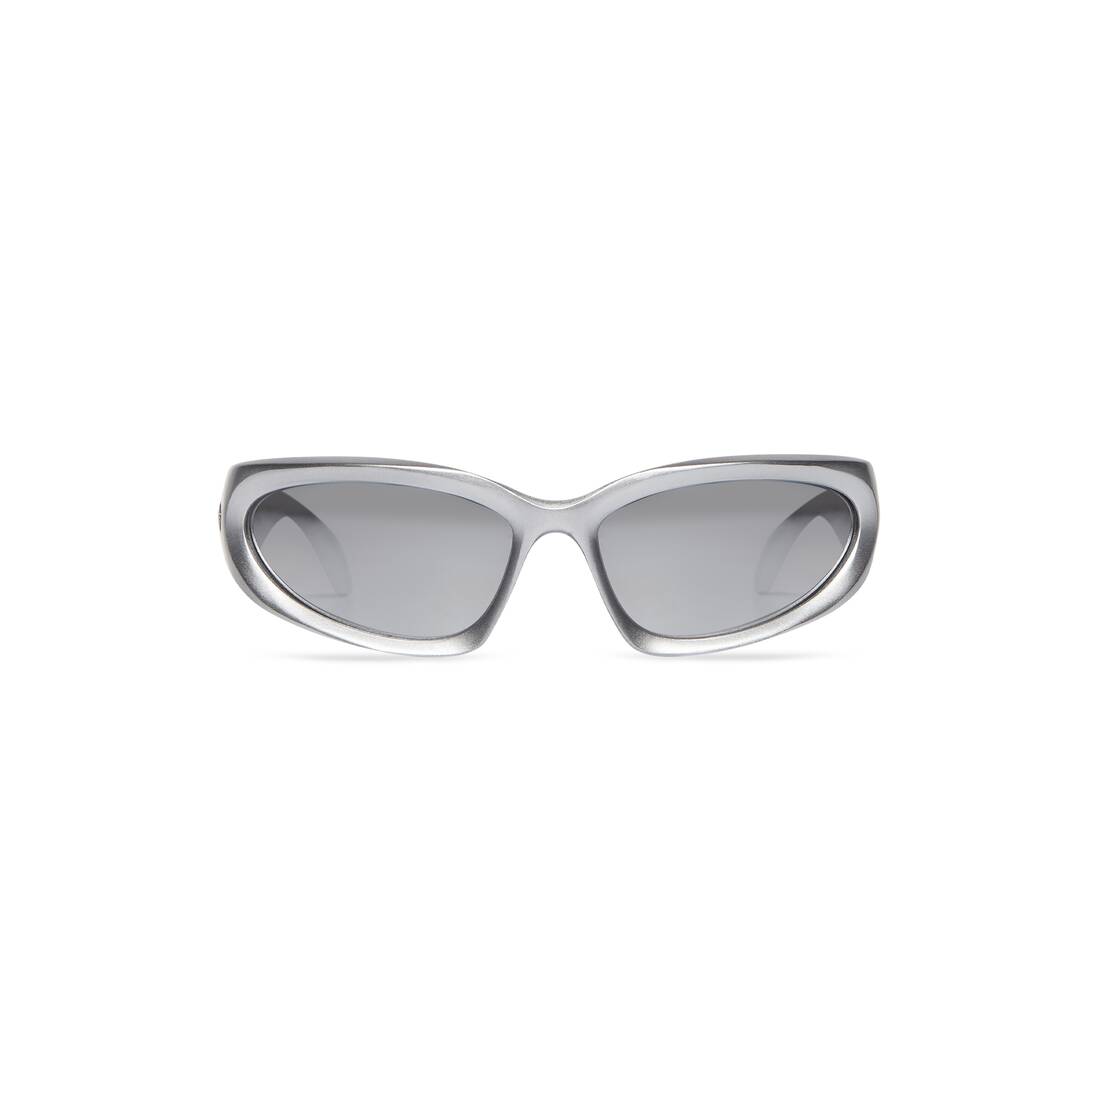 BALENCIAGA  Swift Oval  Sunglasses45000円で即購入可能ですか